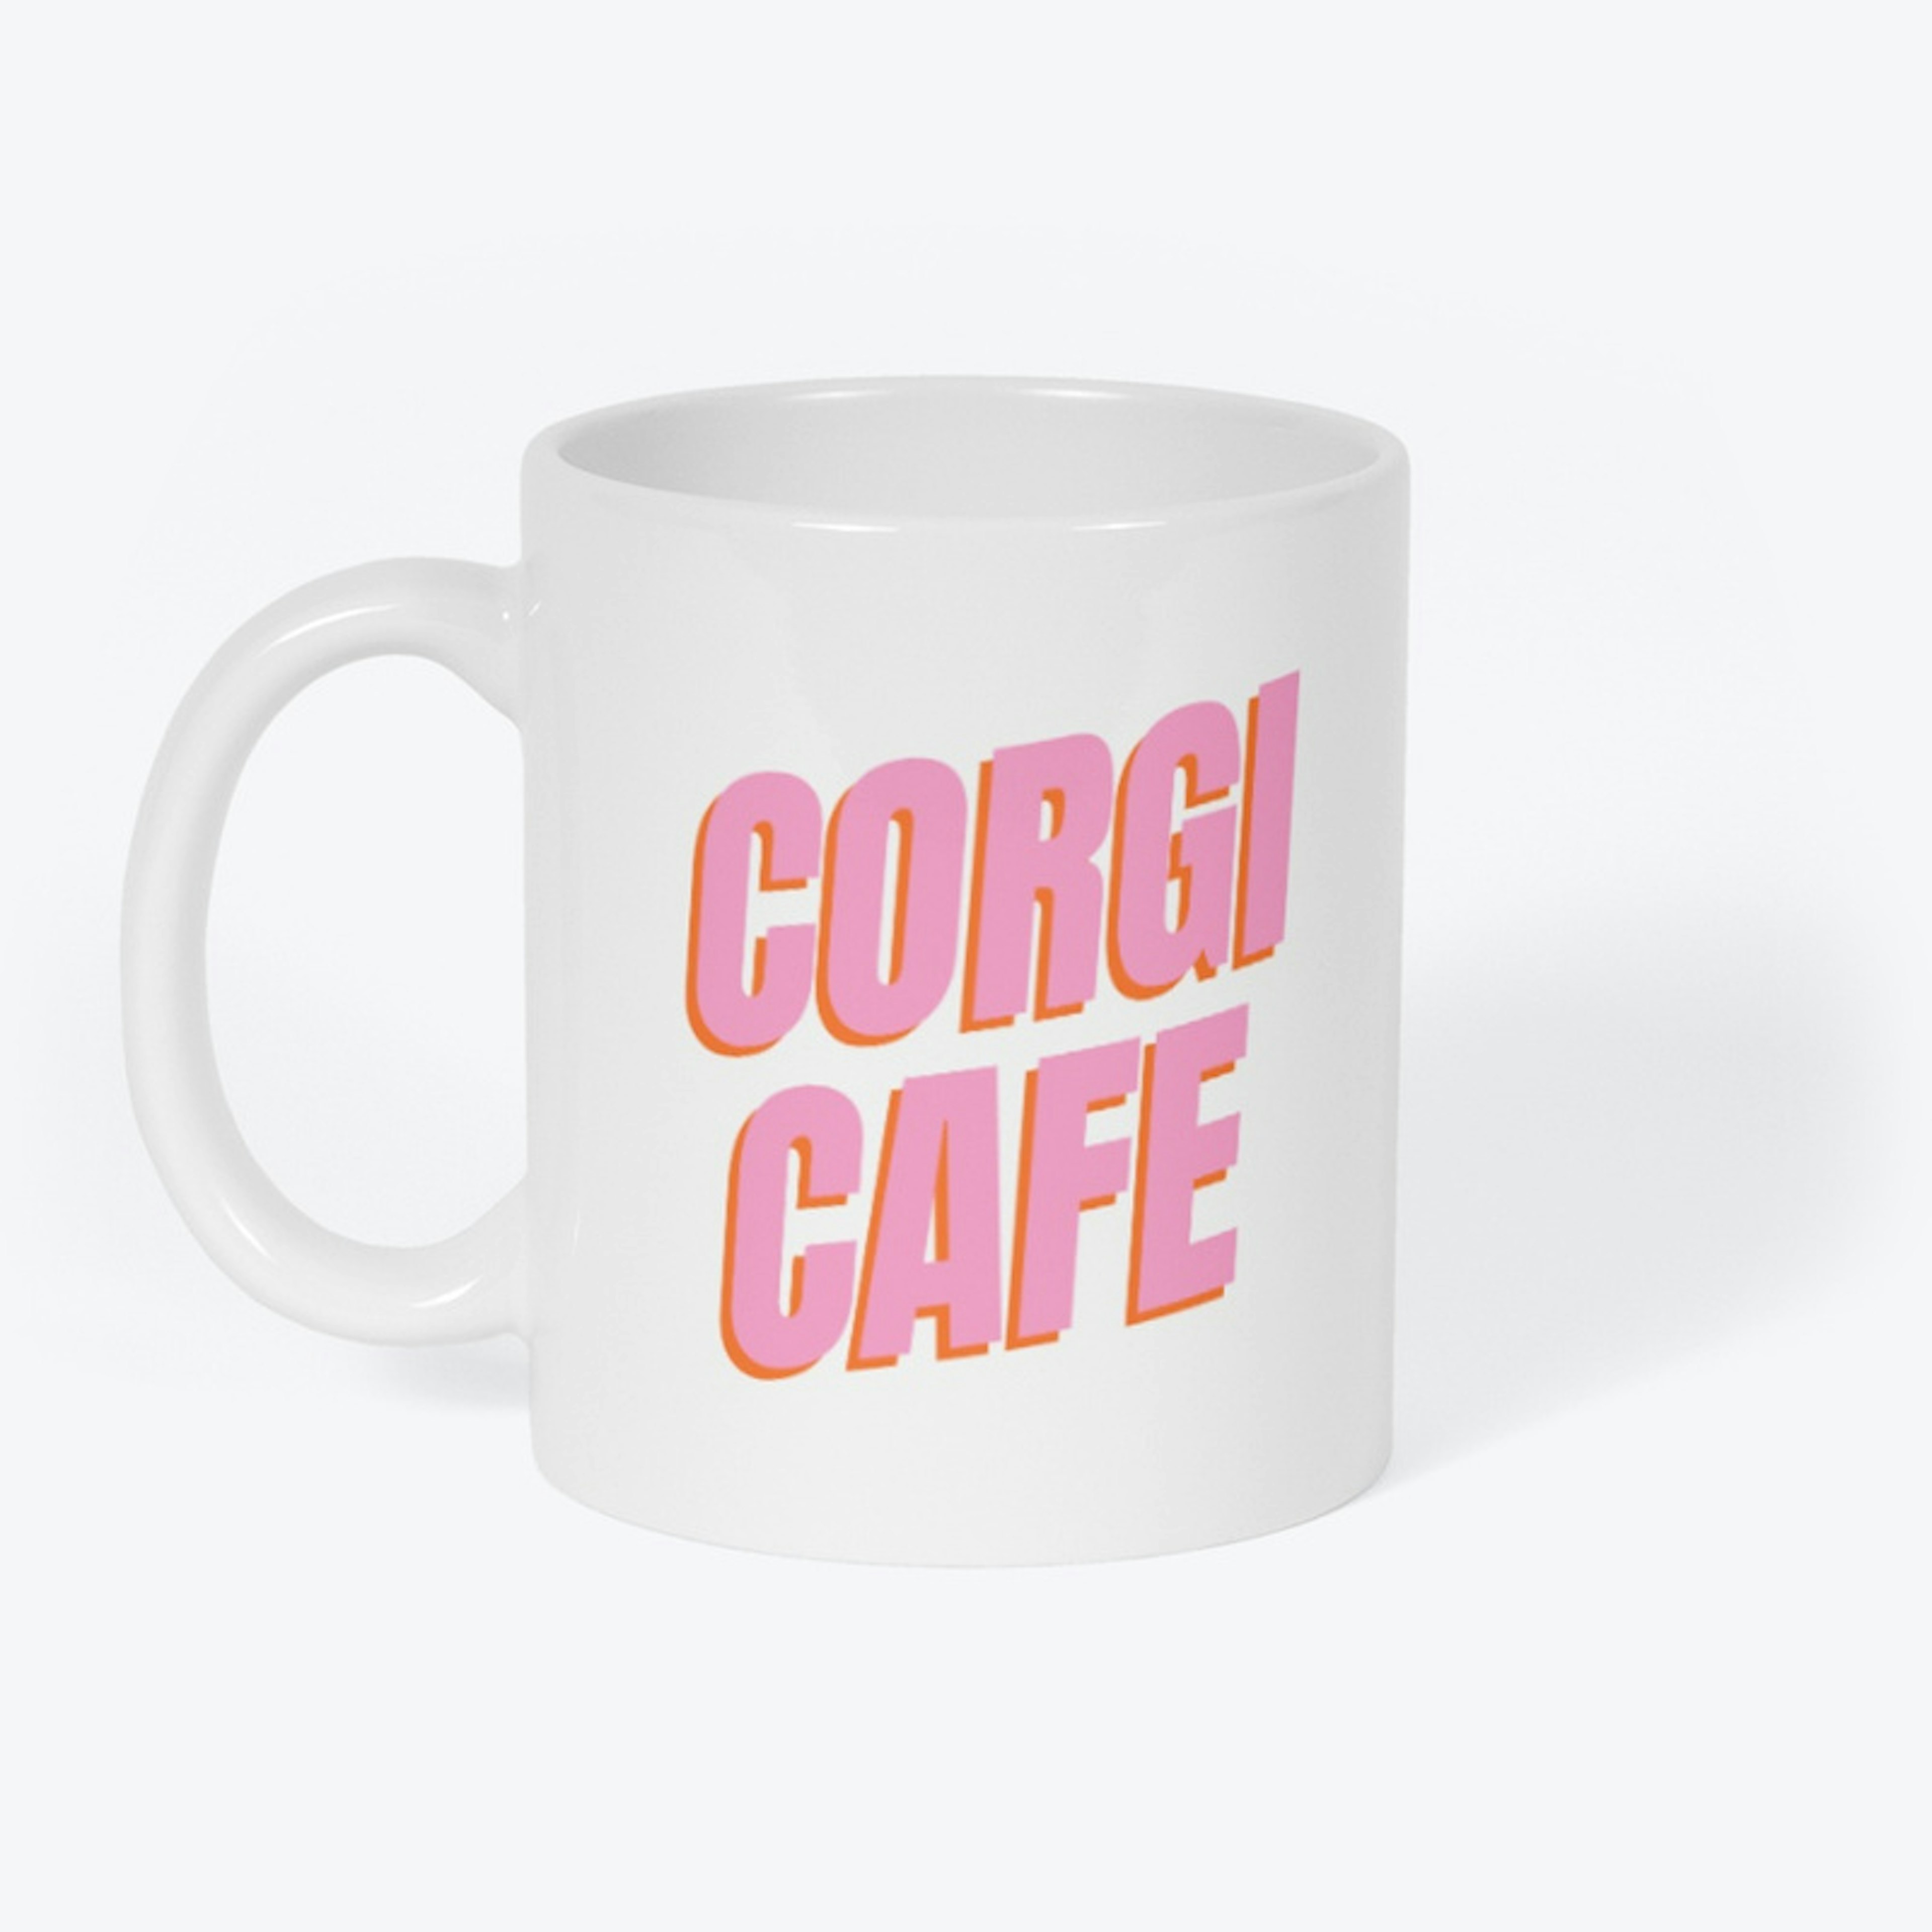 Corgi Cafe Hype Mug - White